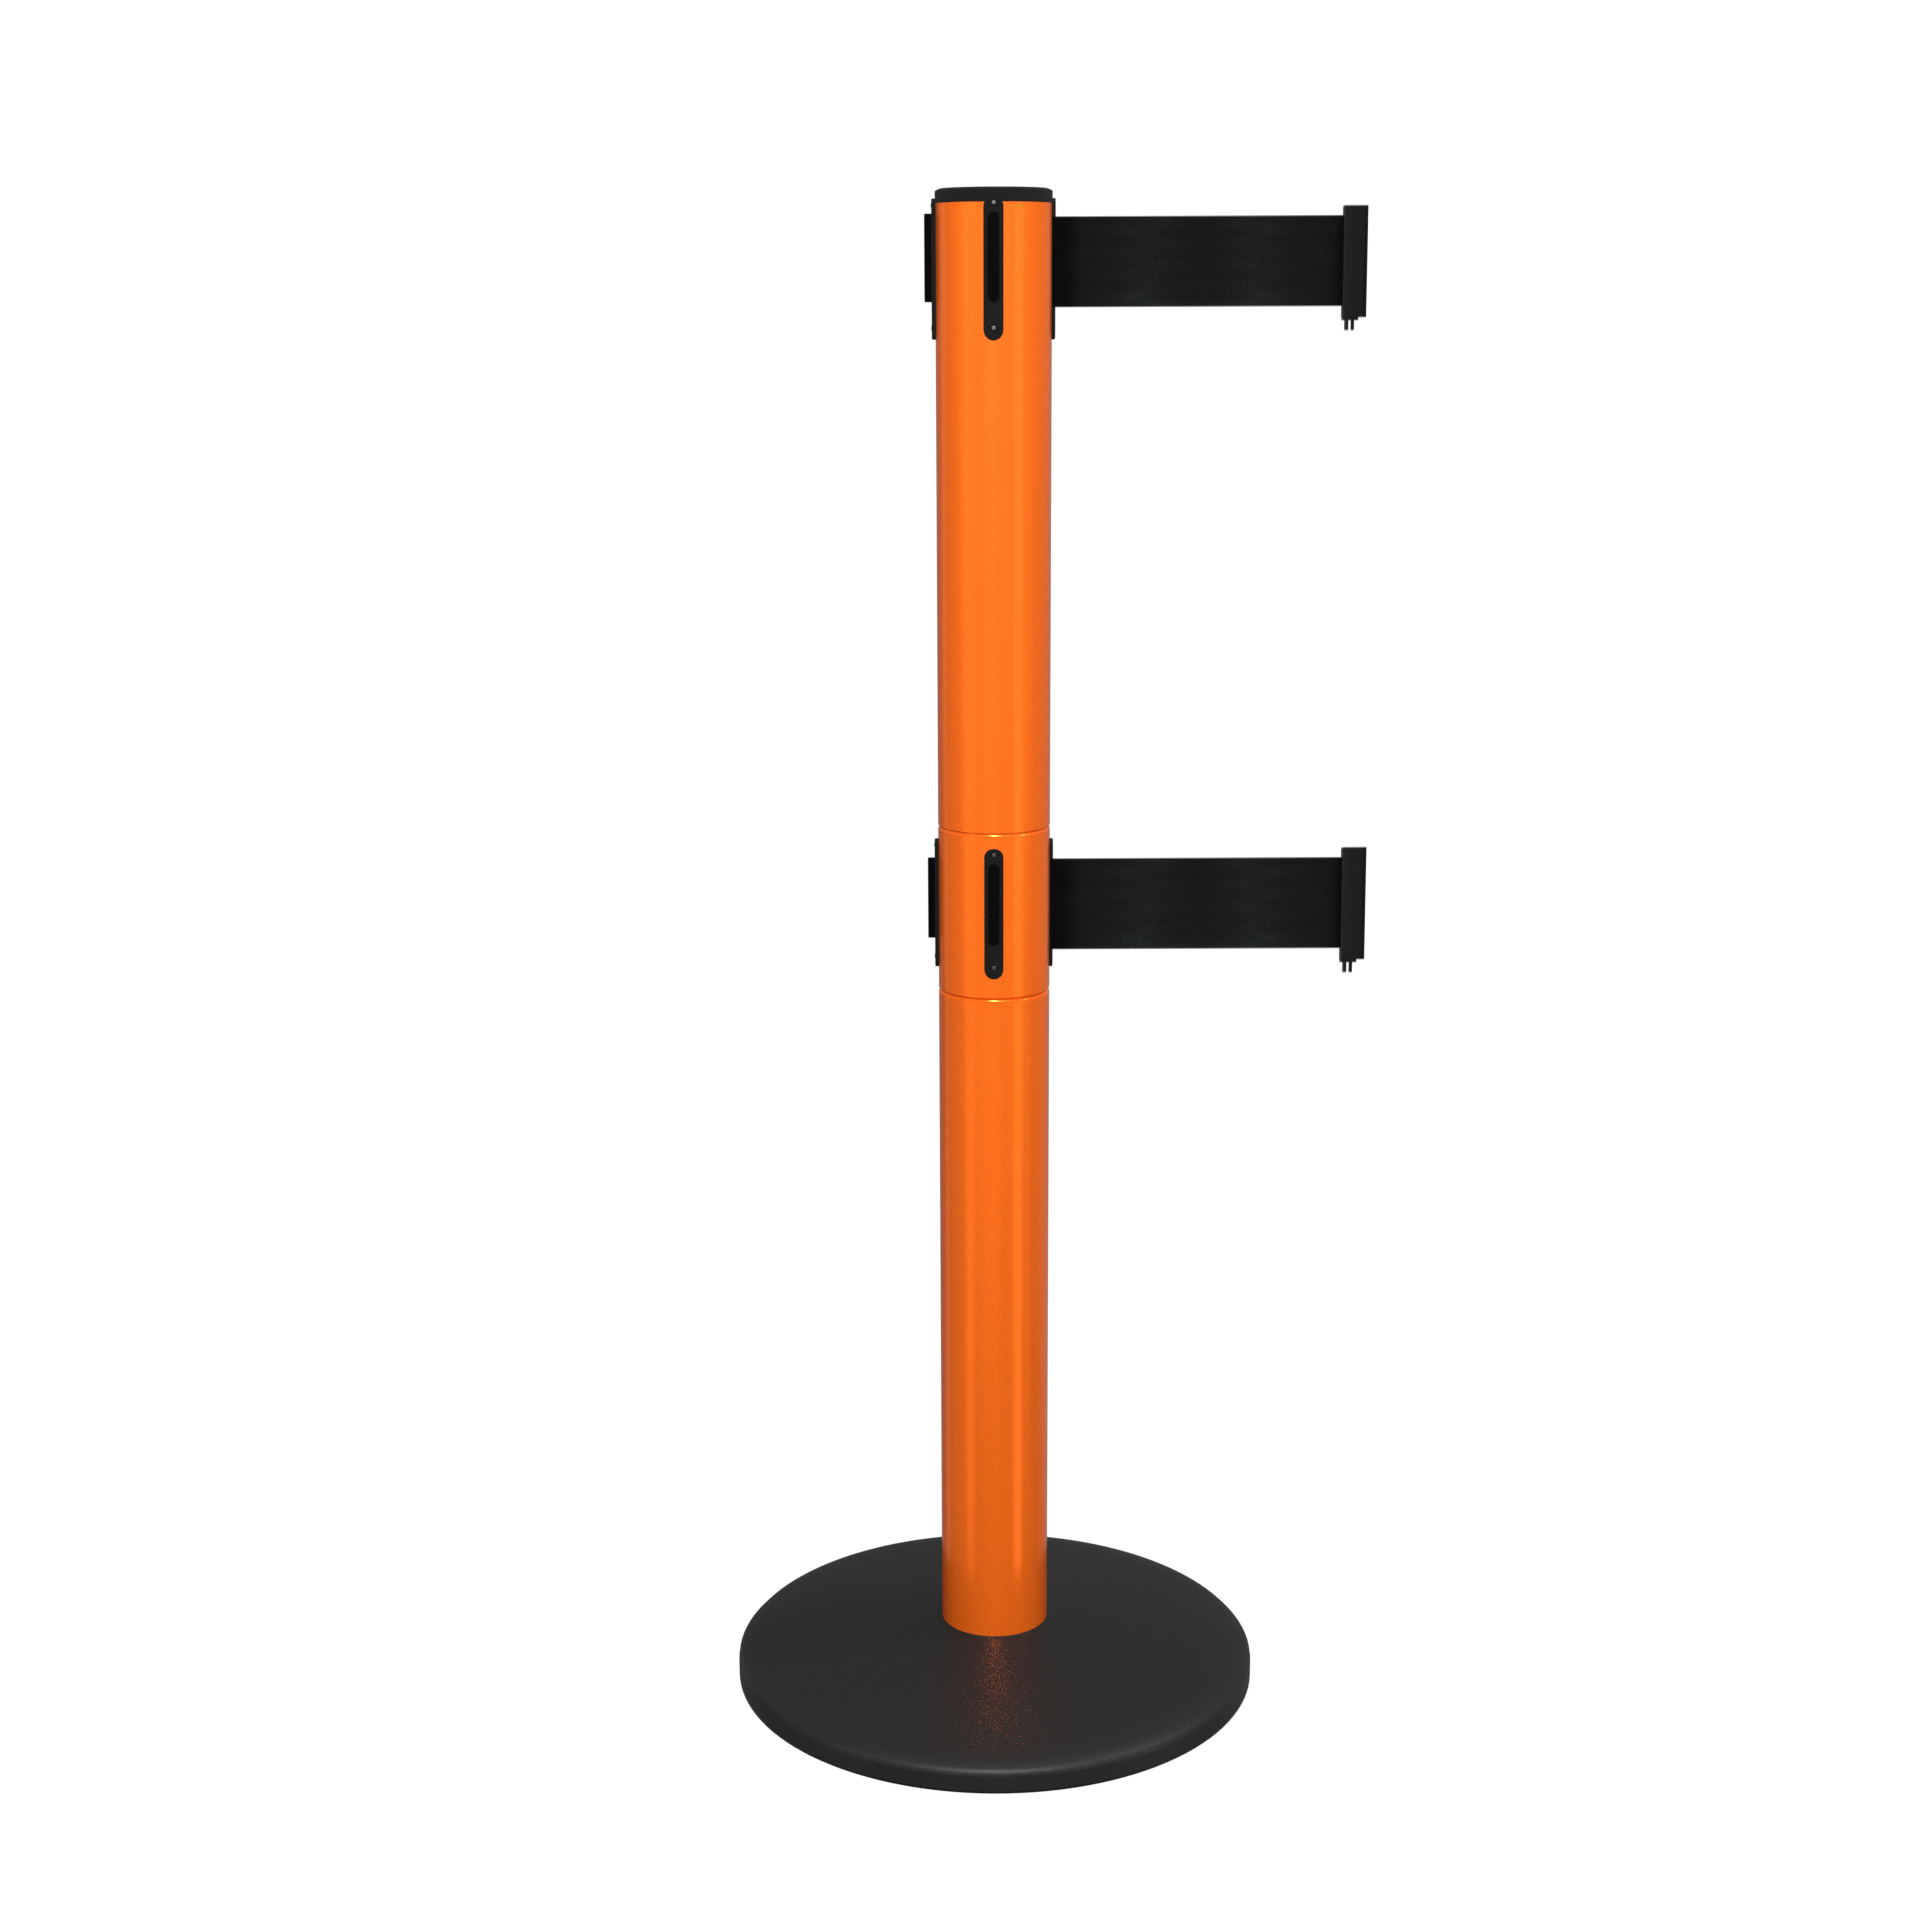 Orange SafetyPro 300 Retractable Belt Barrier with Twin Belts